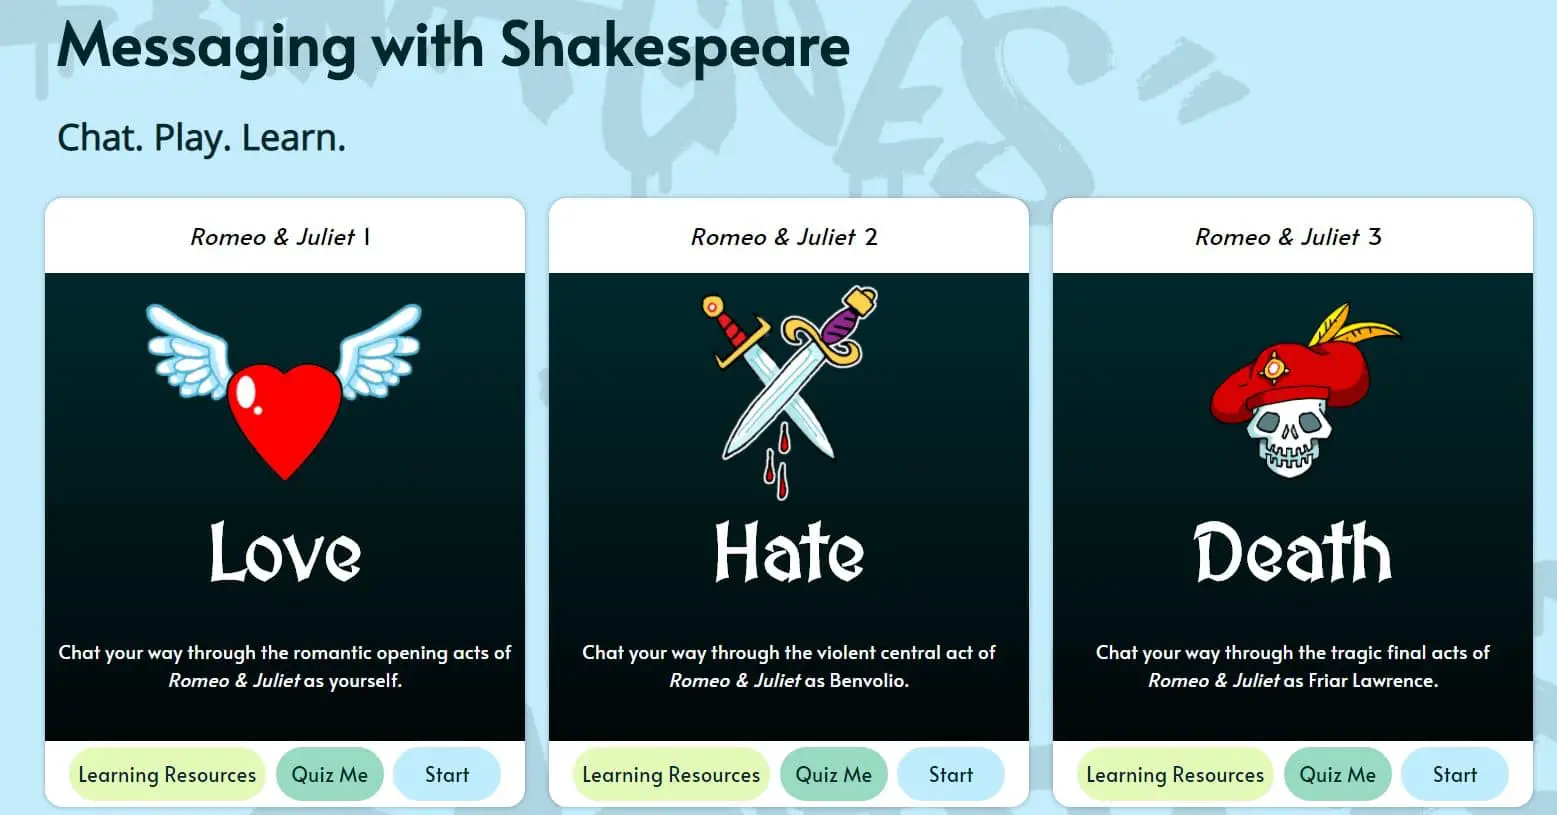 9 Top Shakespeare Translator Tools Experience The Brilliance